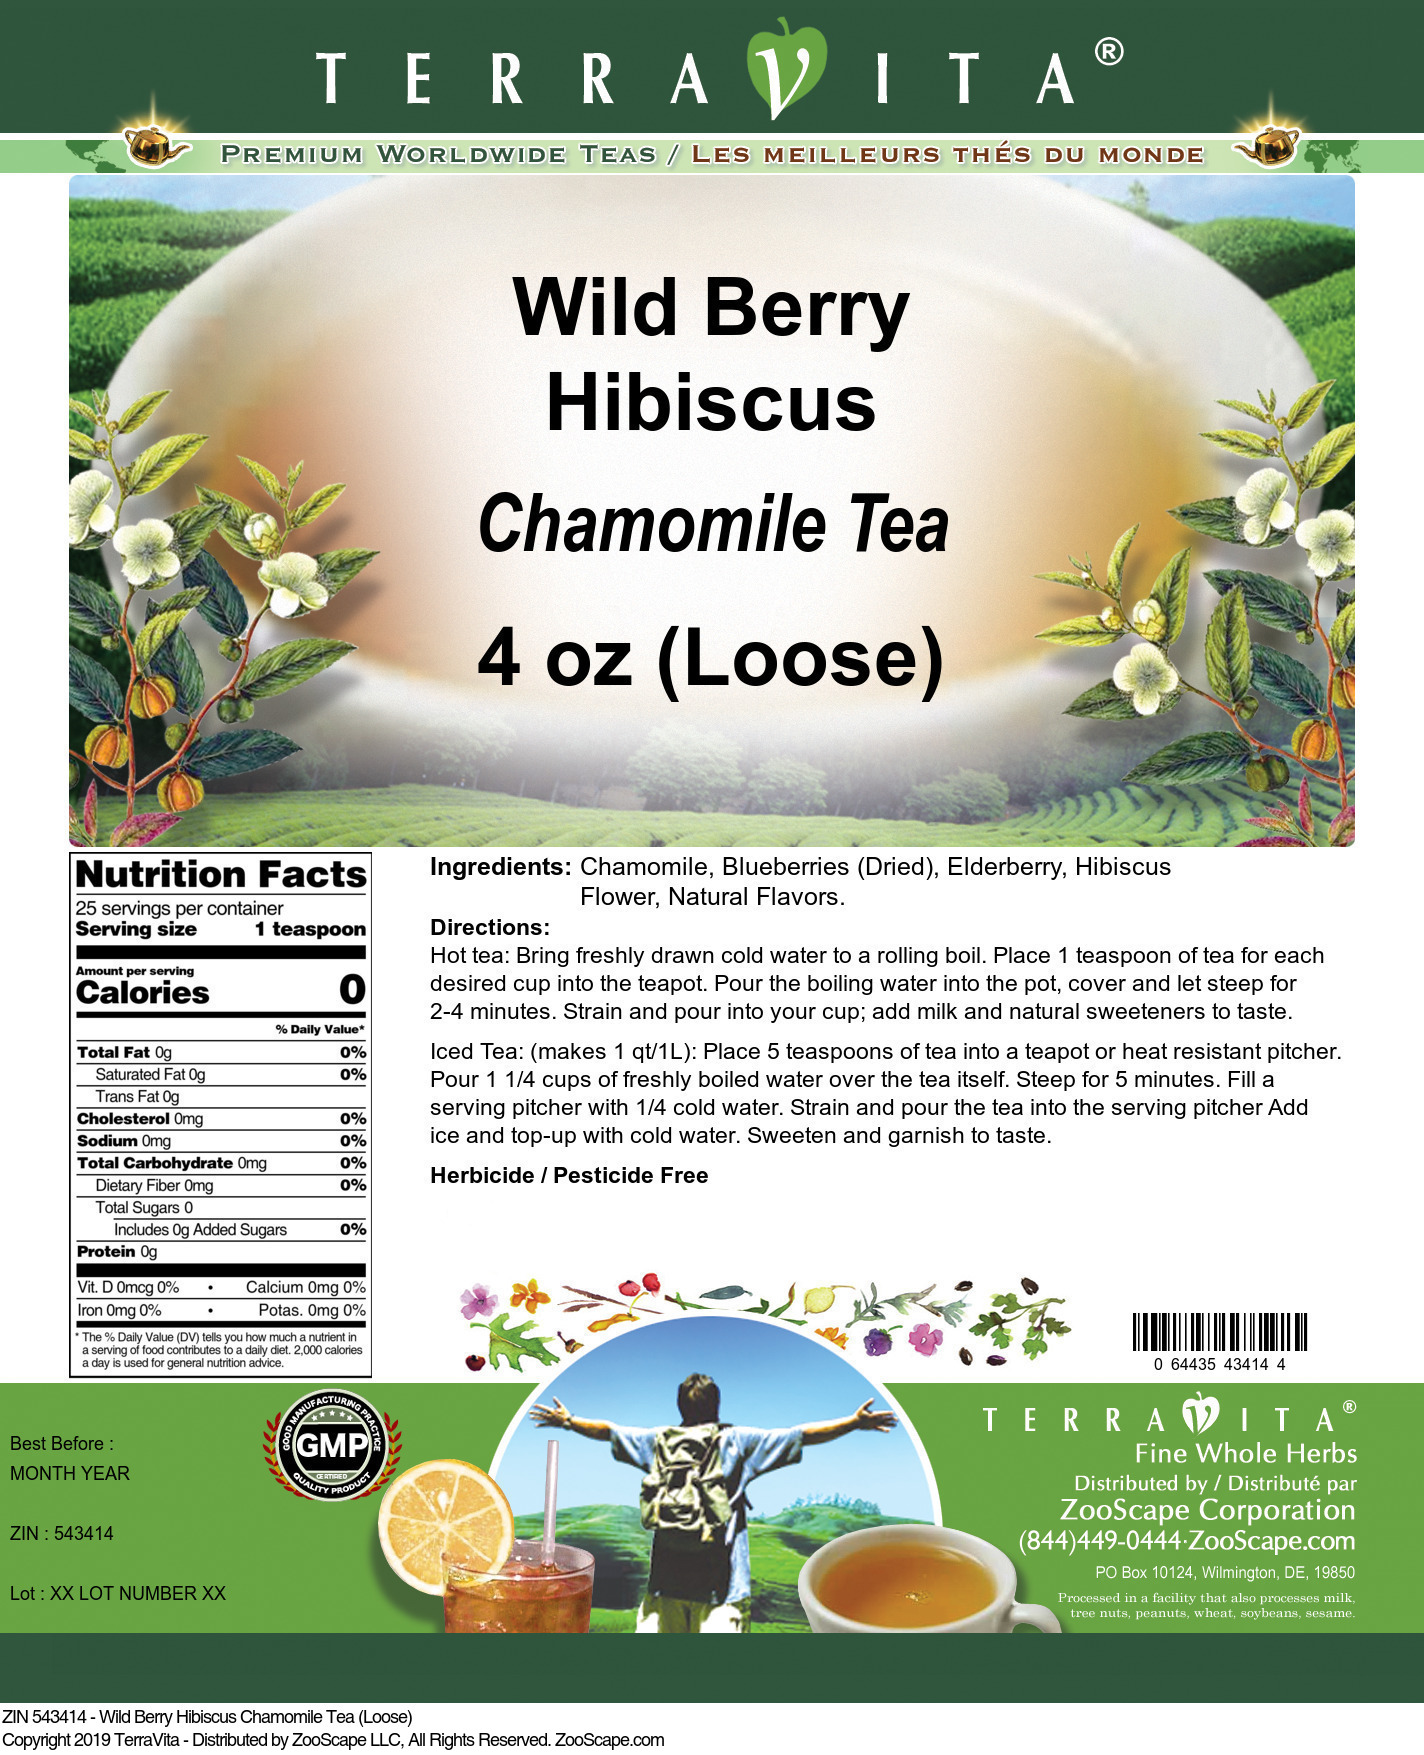 Wild Berry Hibiscus Chamomile Tea (Loose) - Label